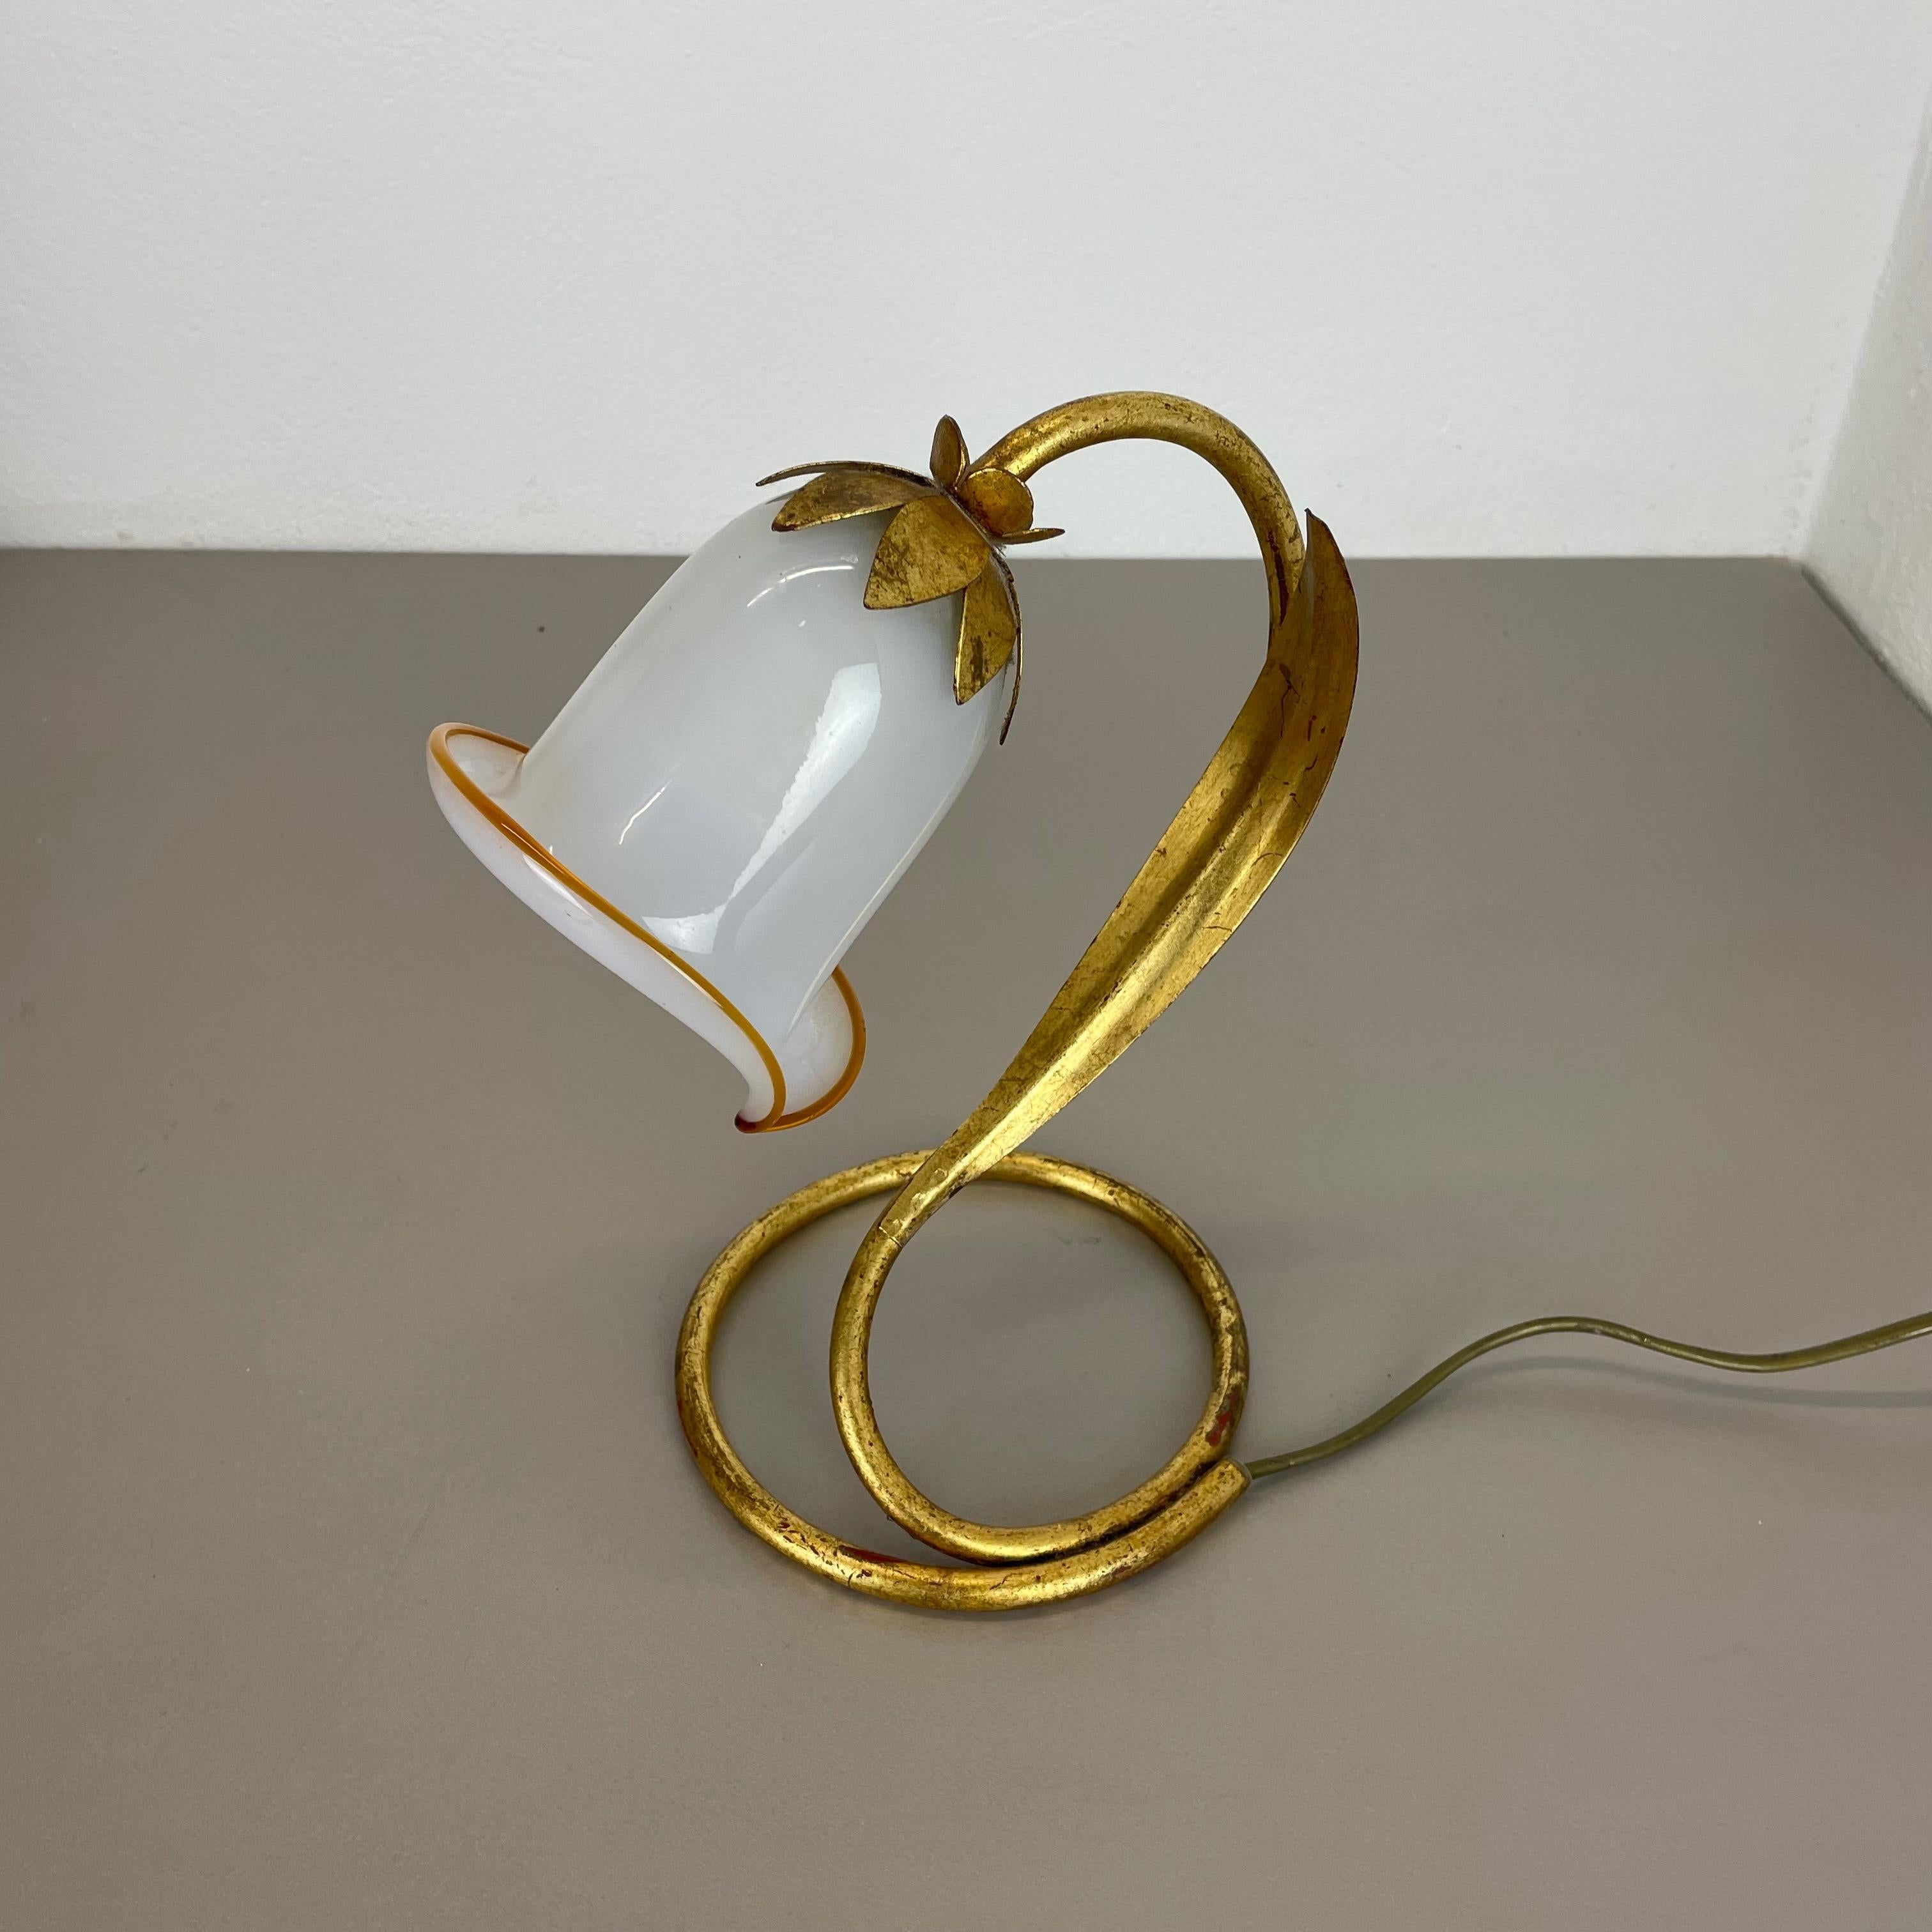 German Hans Kogl Style Golden Florentiner Murano Table Light Sconces, Italy, 1970s For Sale